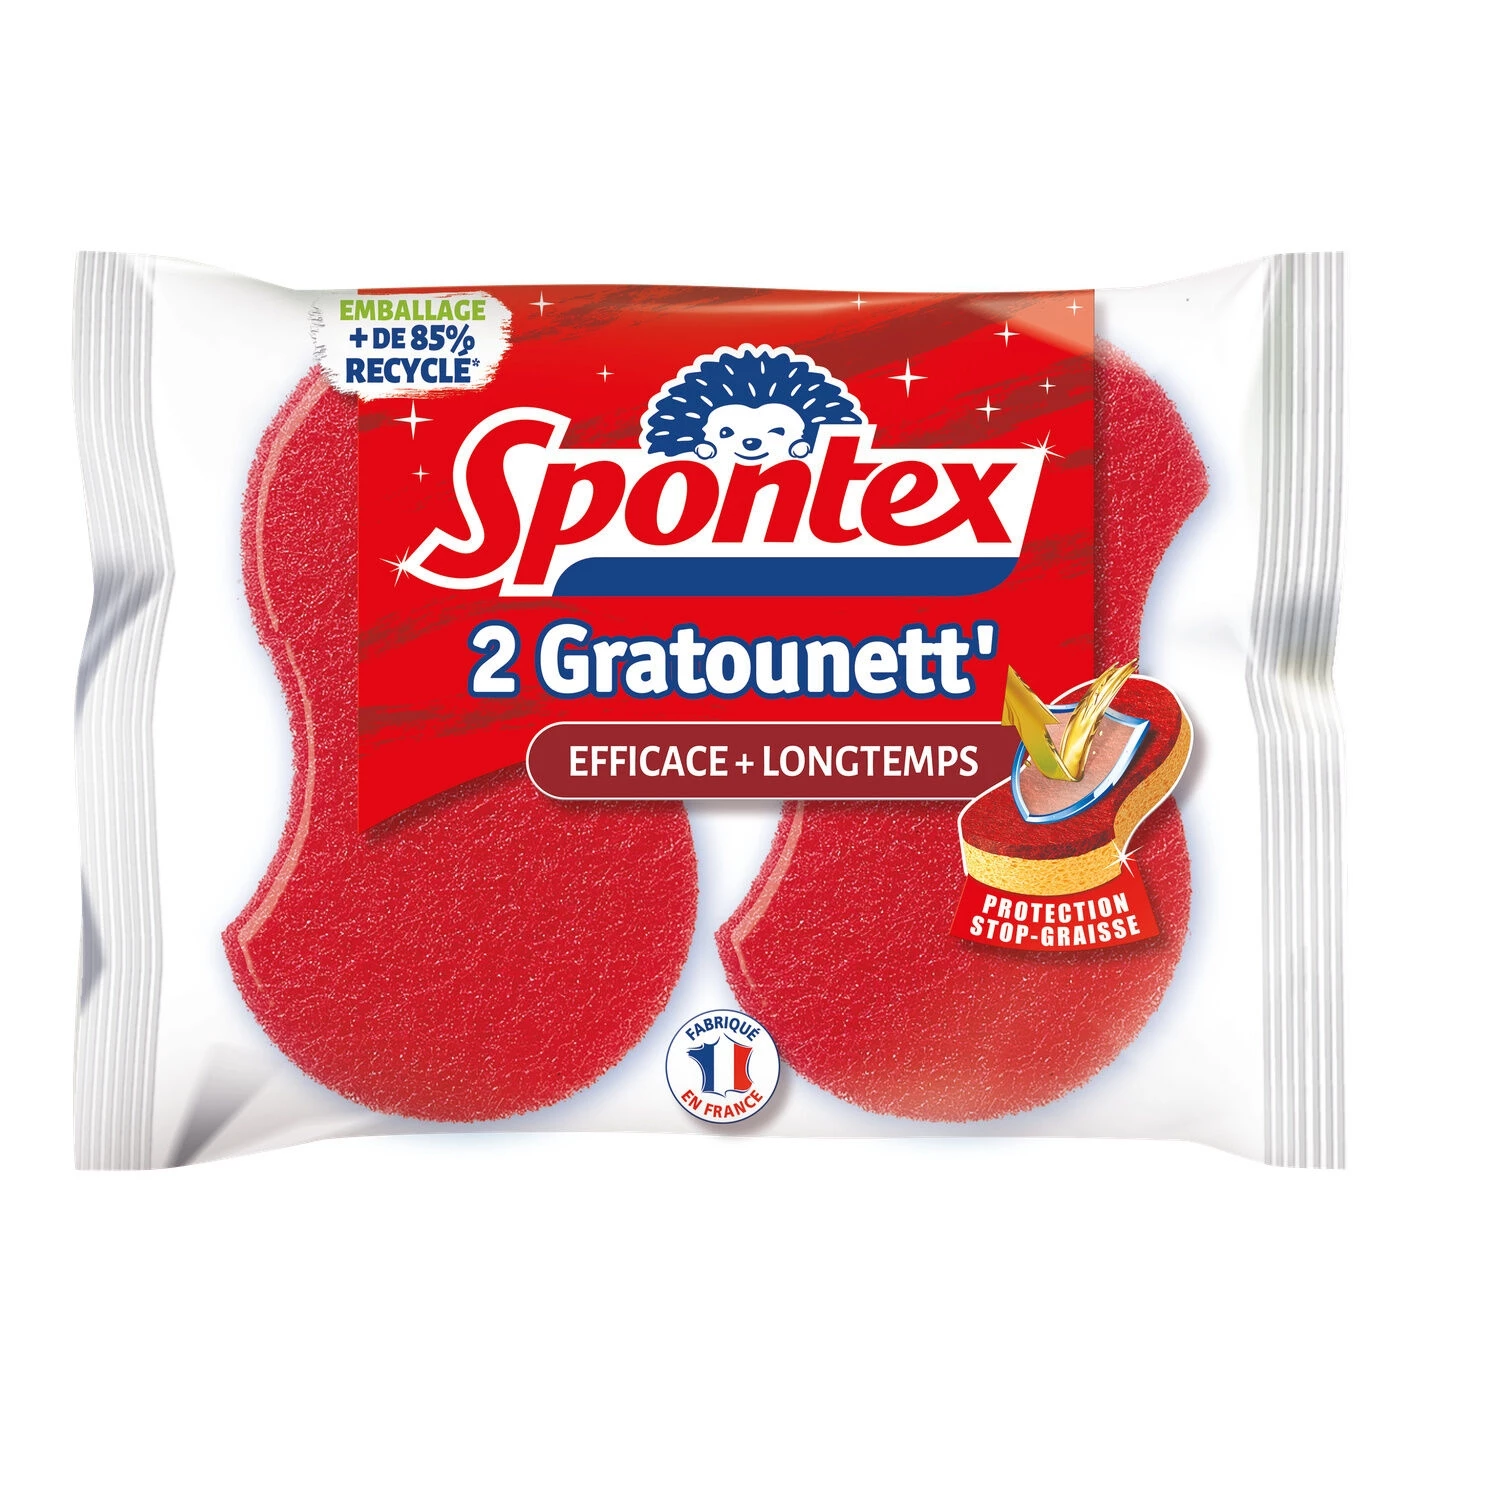 X2 Gratounett Combine Spontex